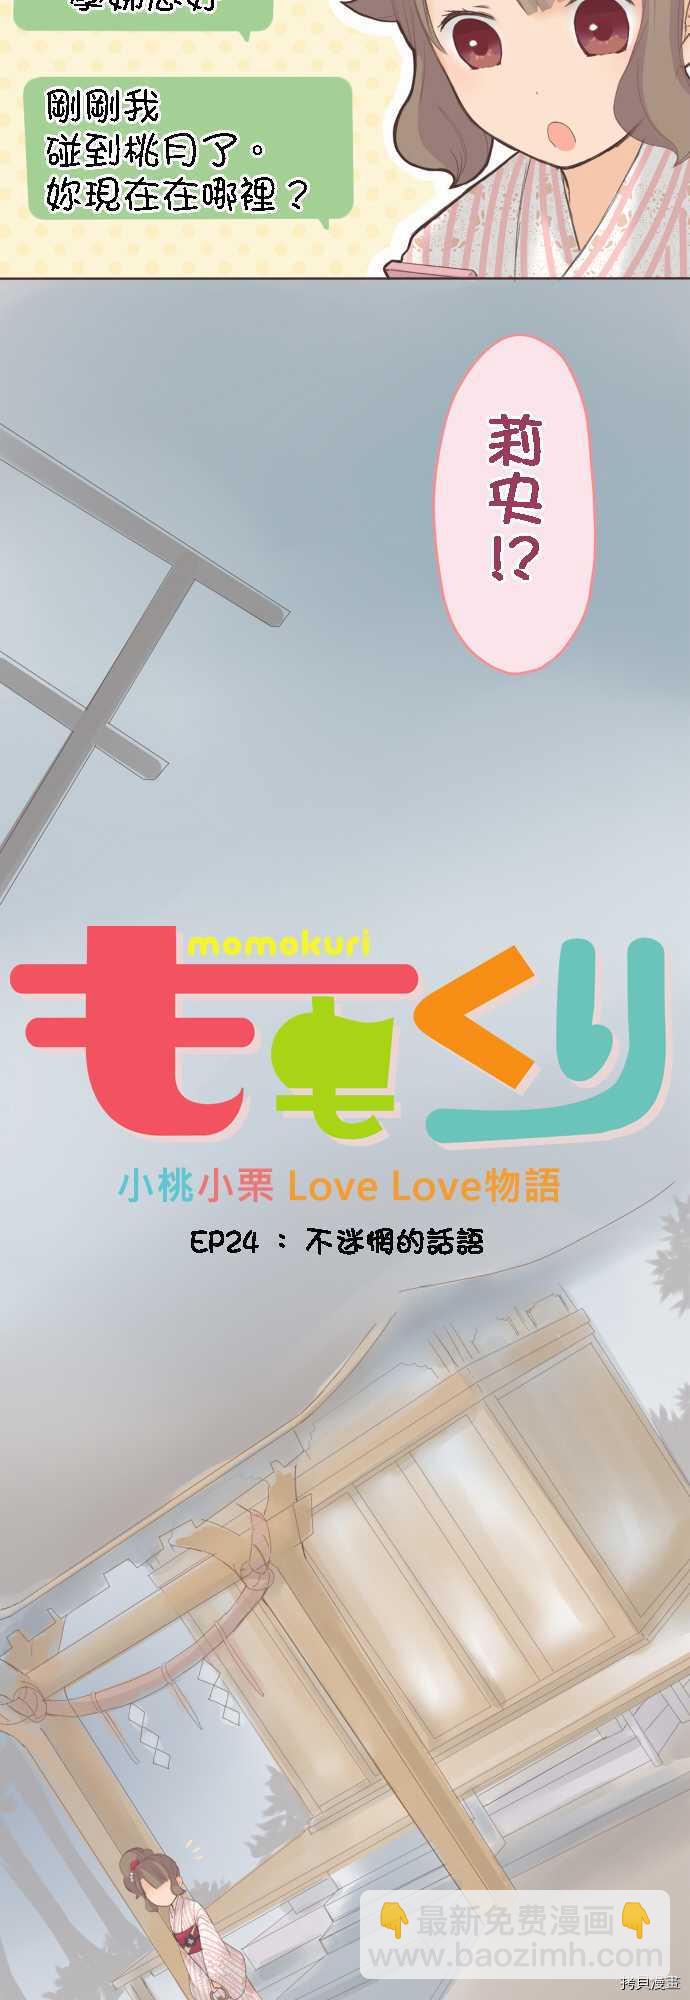 小桃小慄 Love Love物語 - 第24話 - 2